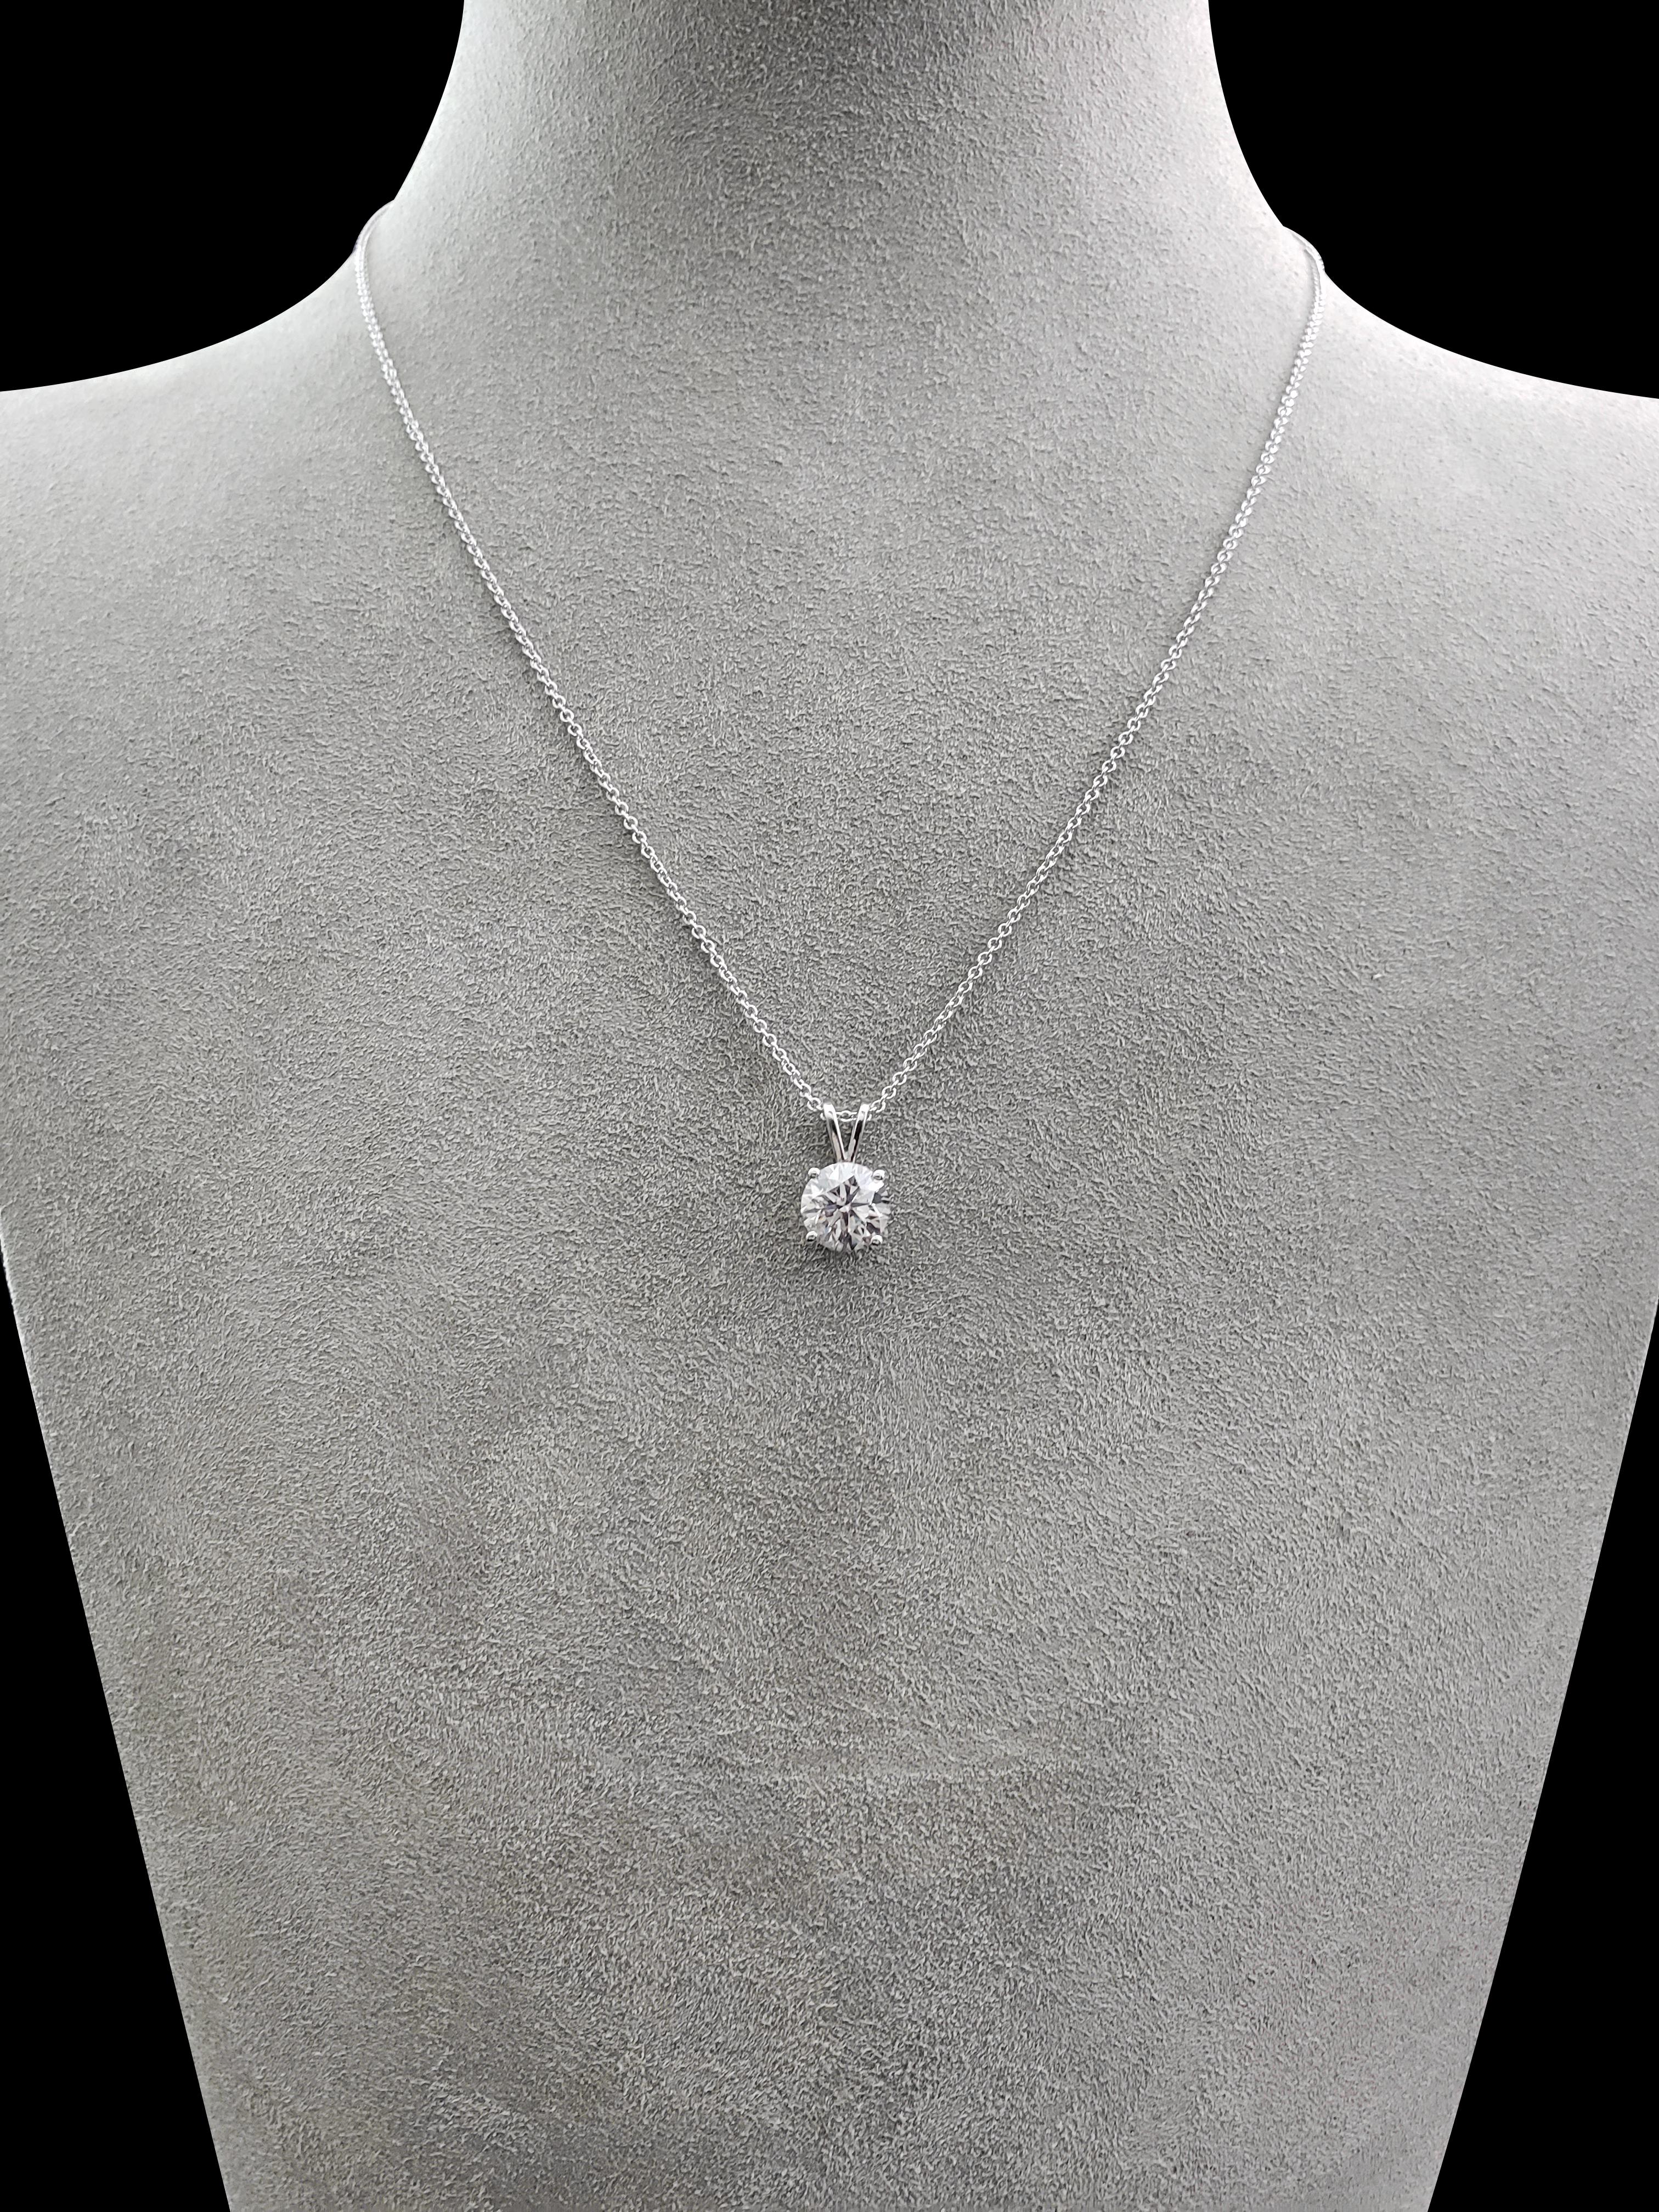 Contemporary 2.04 Carat Round Diamond Solitaire Pendant Necklace